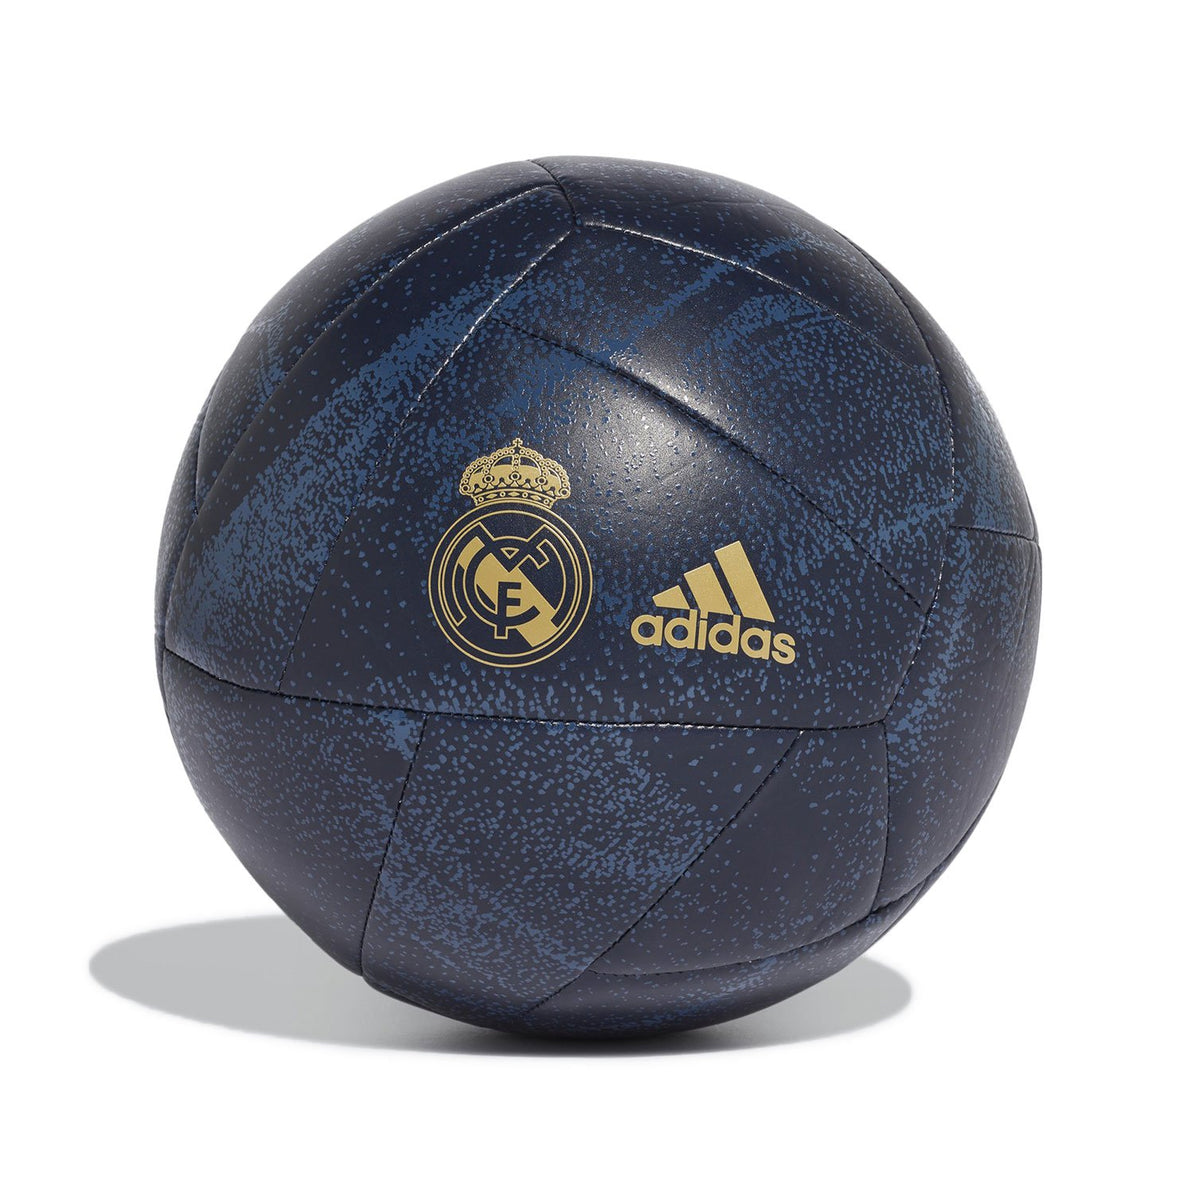 Real Madrid Adidas Soccer ball -Blue 